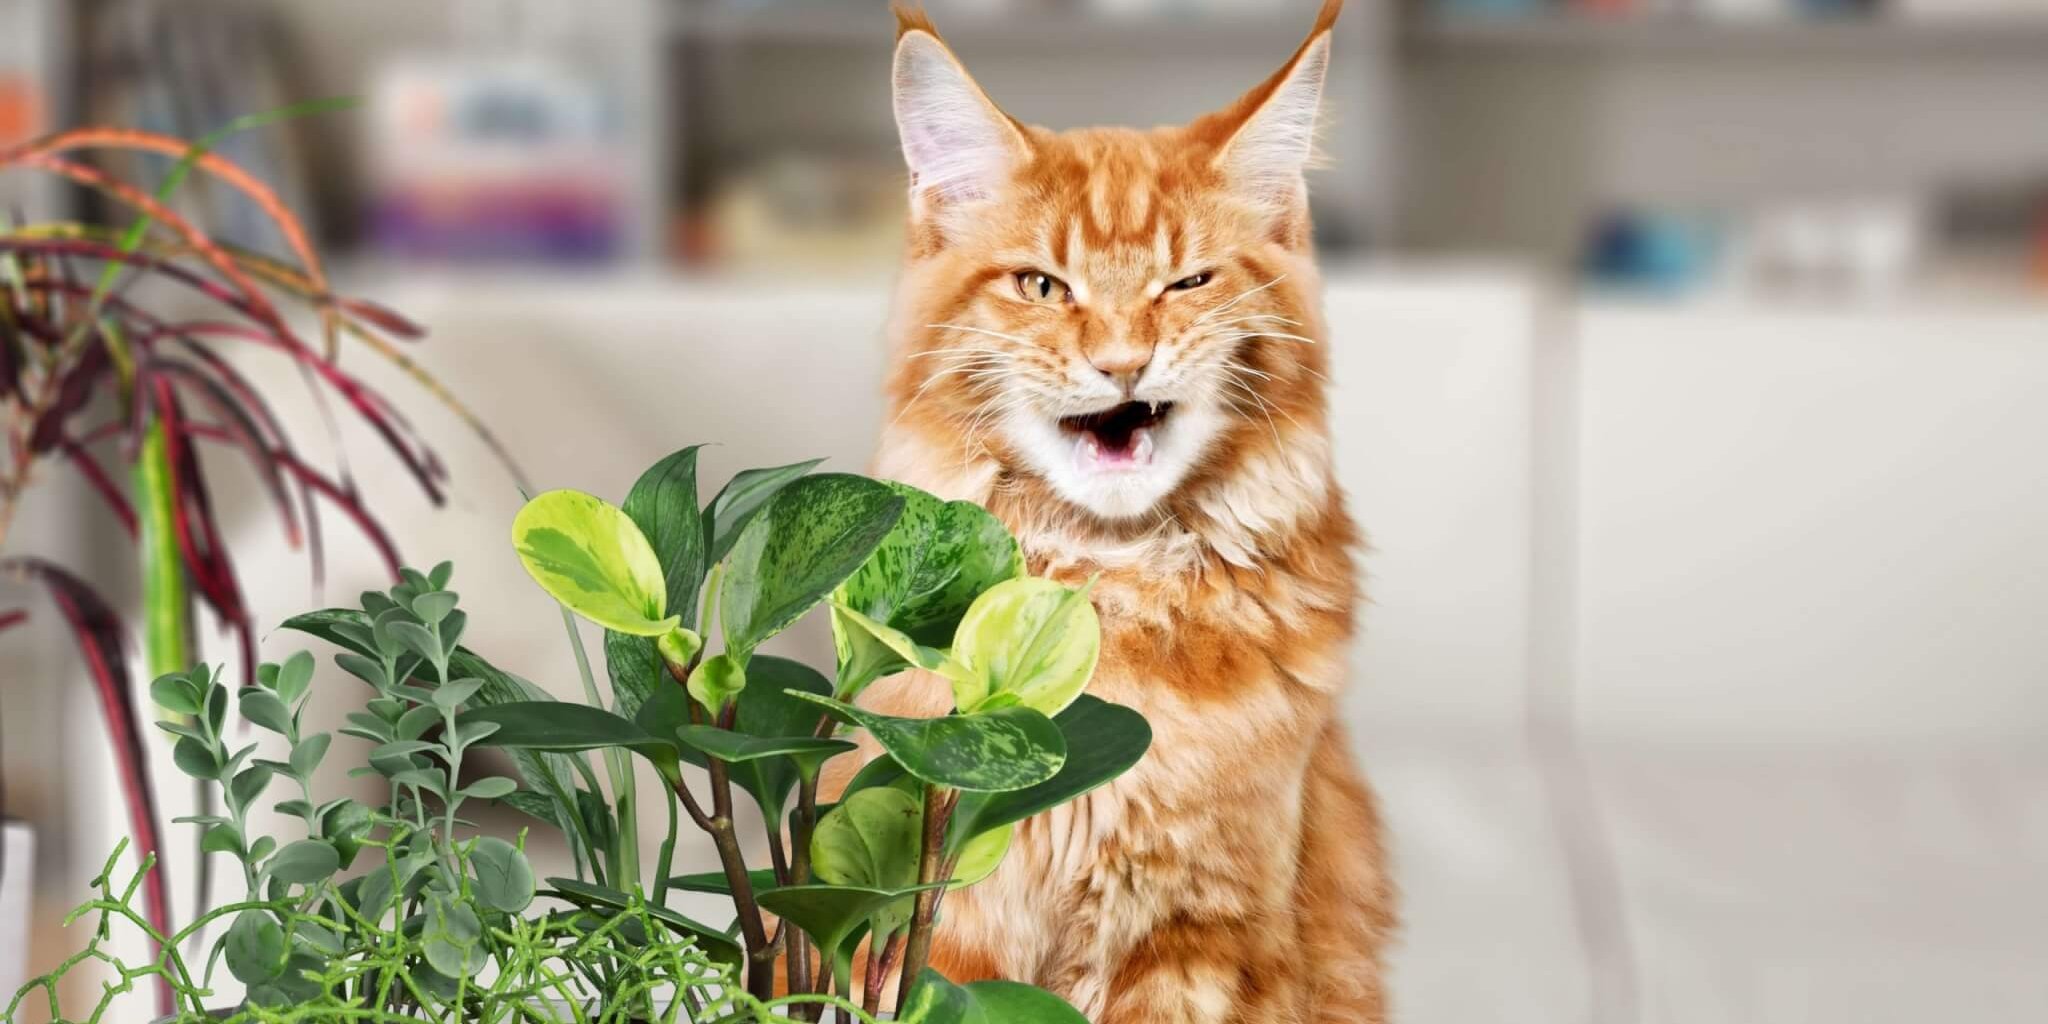 Orange cat looking displeased with his plant-based diet.